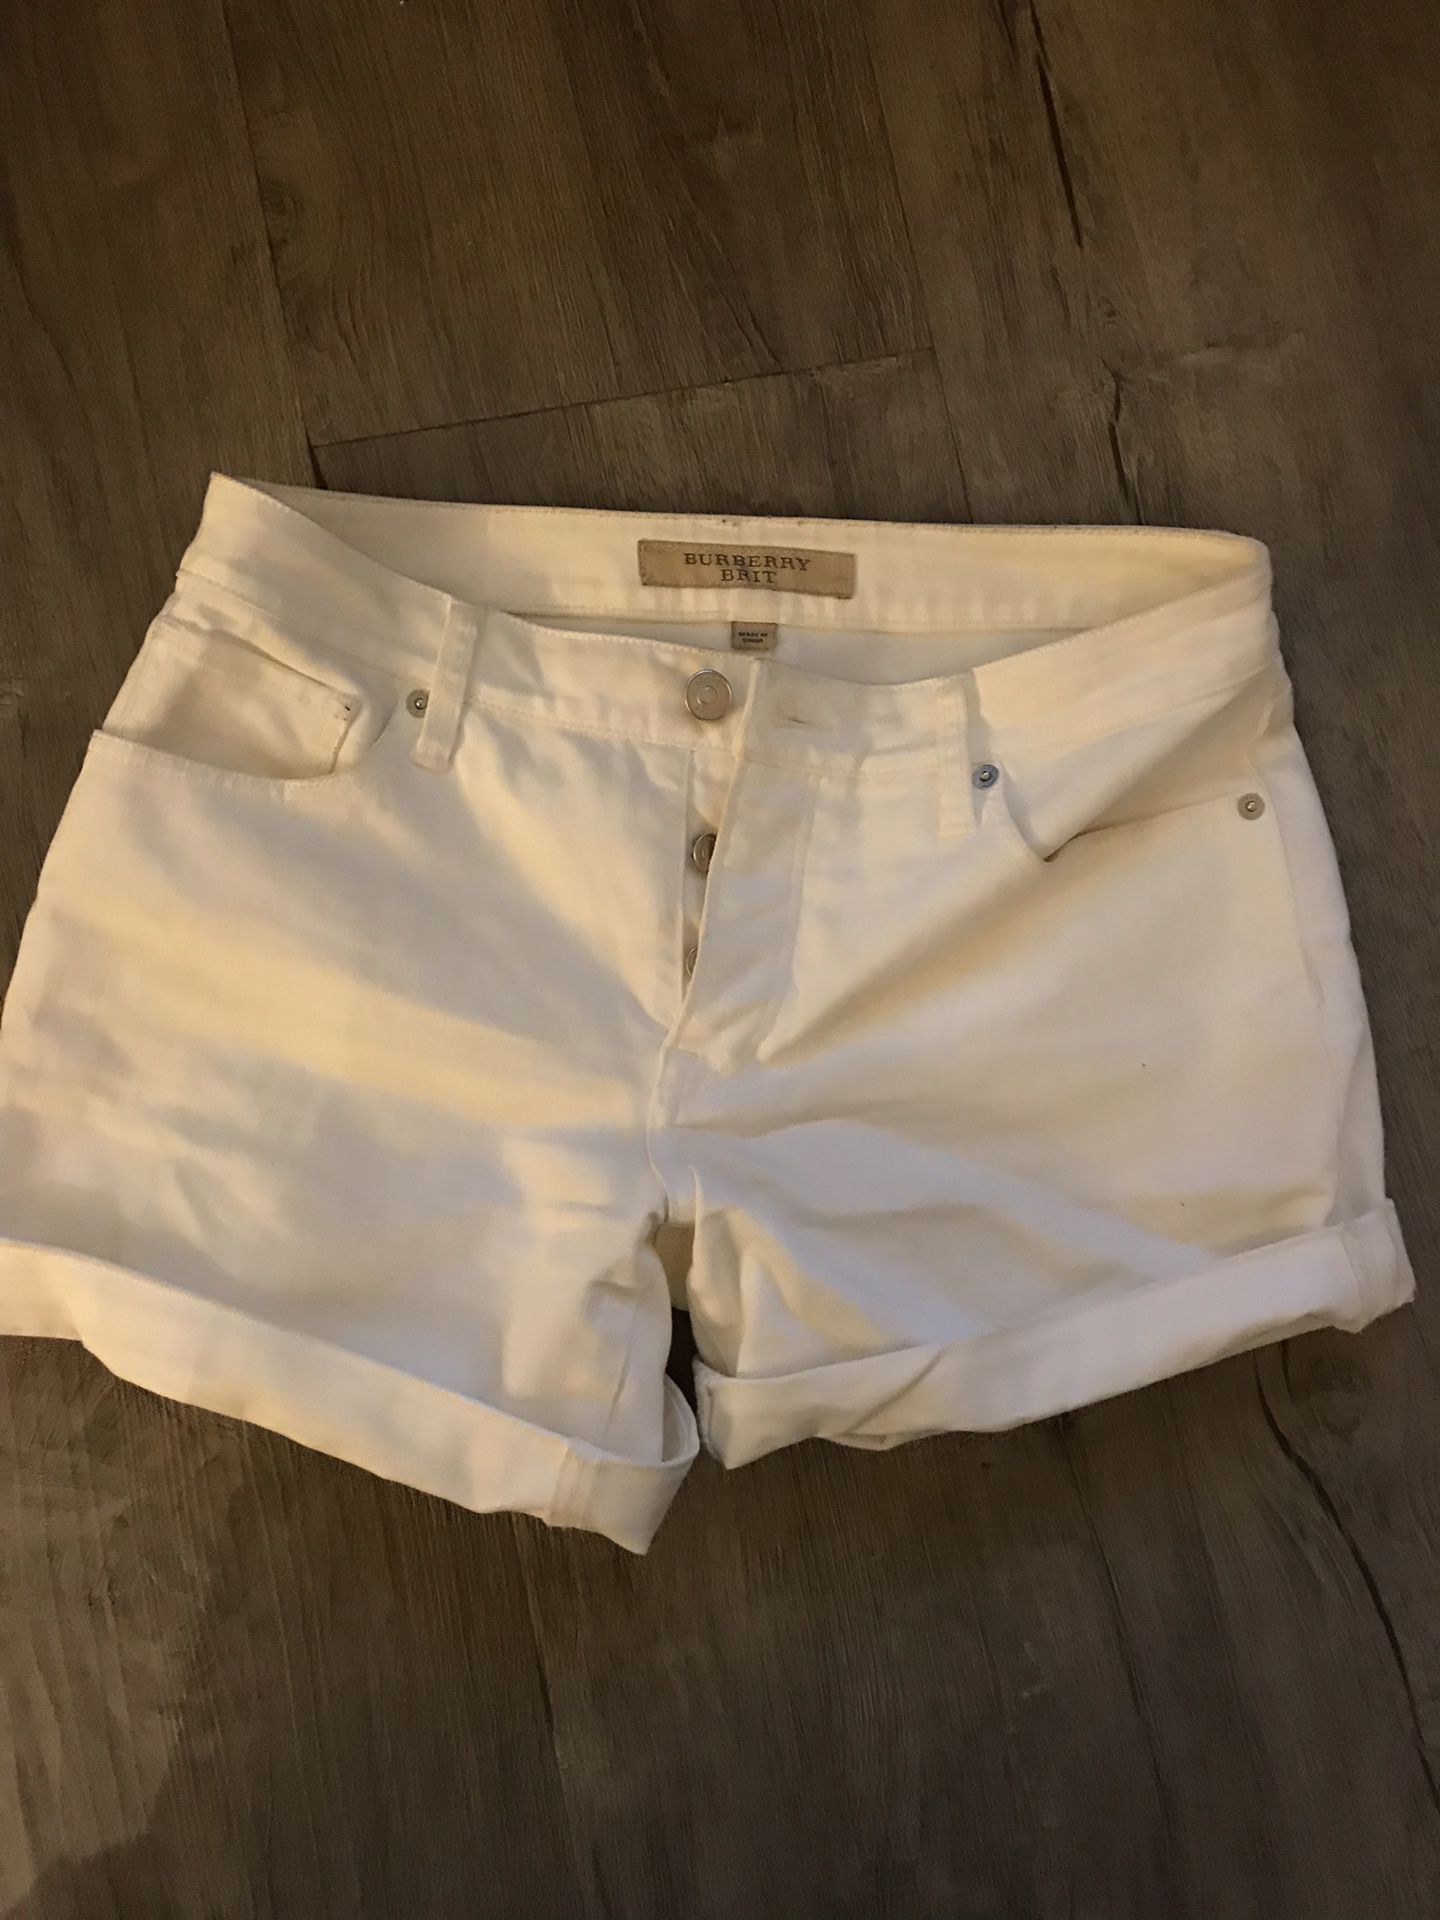 Burberry shorts size W27